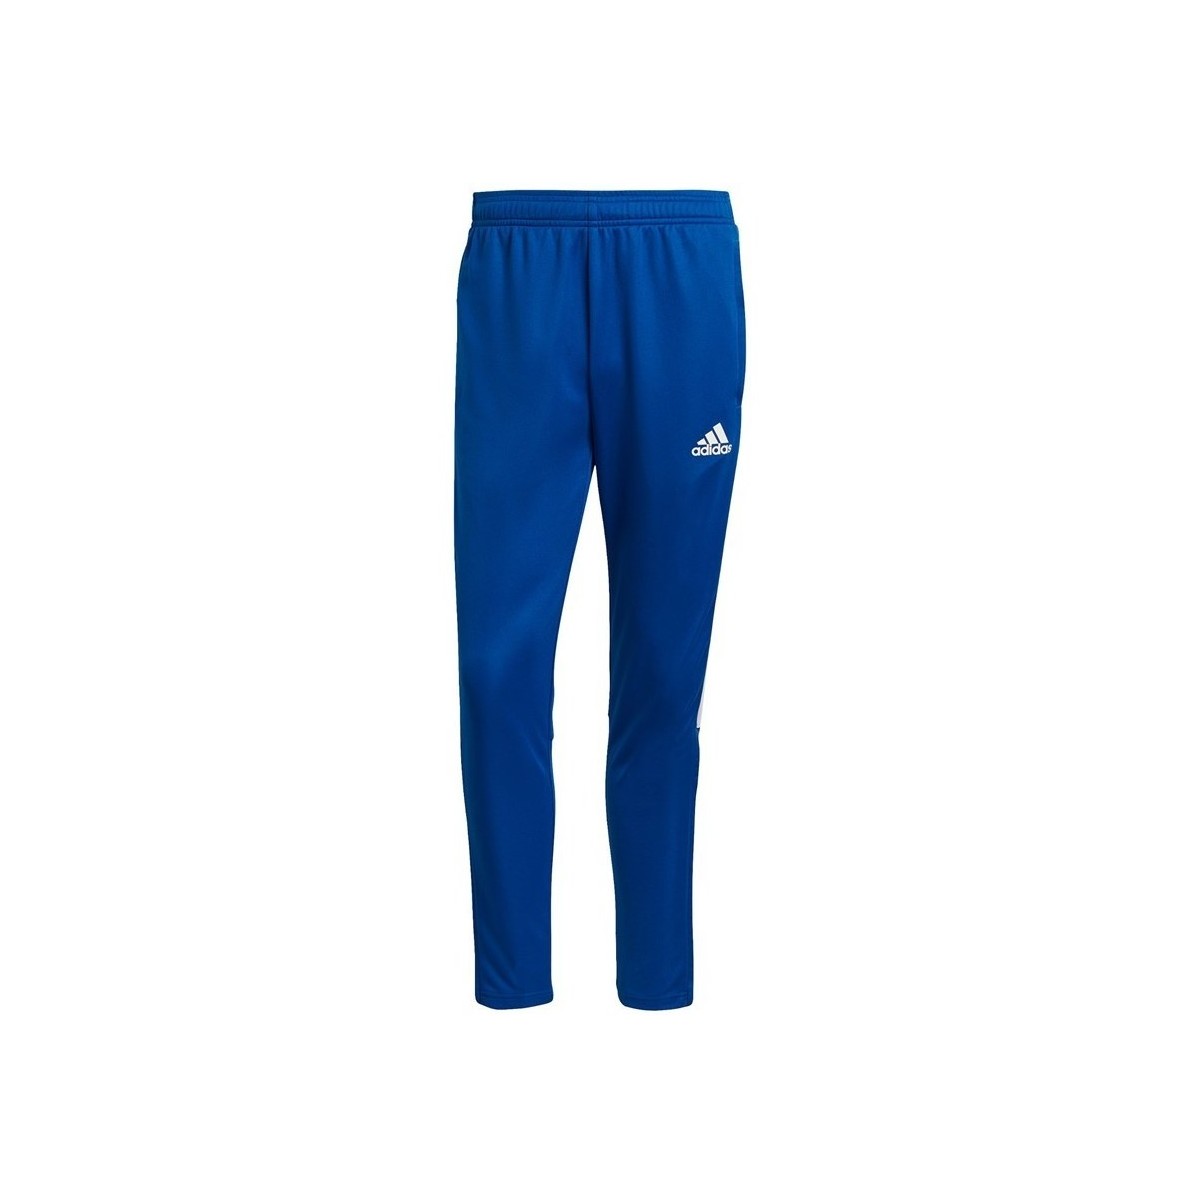 Vêtements Homme Pantalons adidas Originals Tiro 21 Bleu